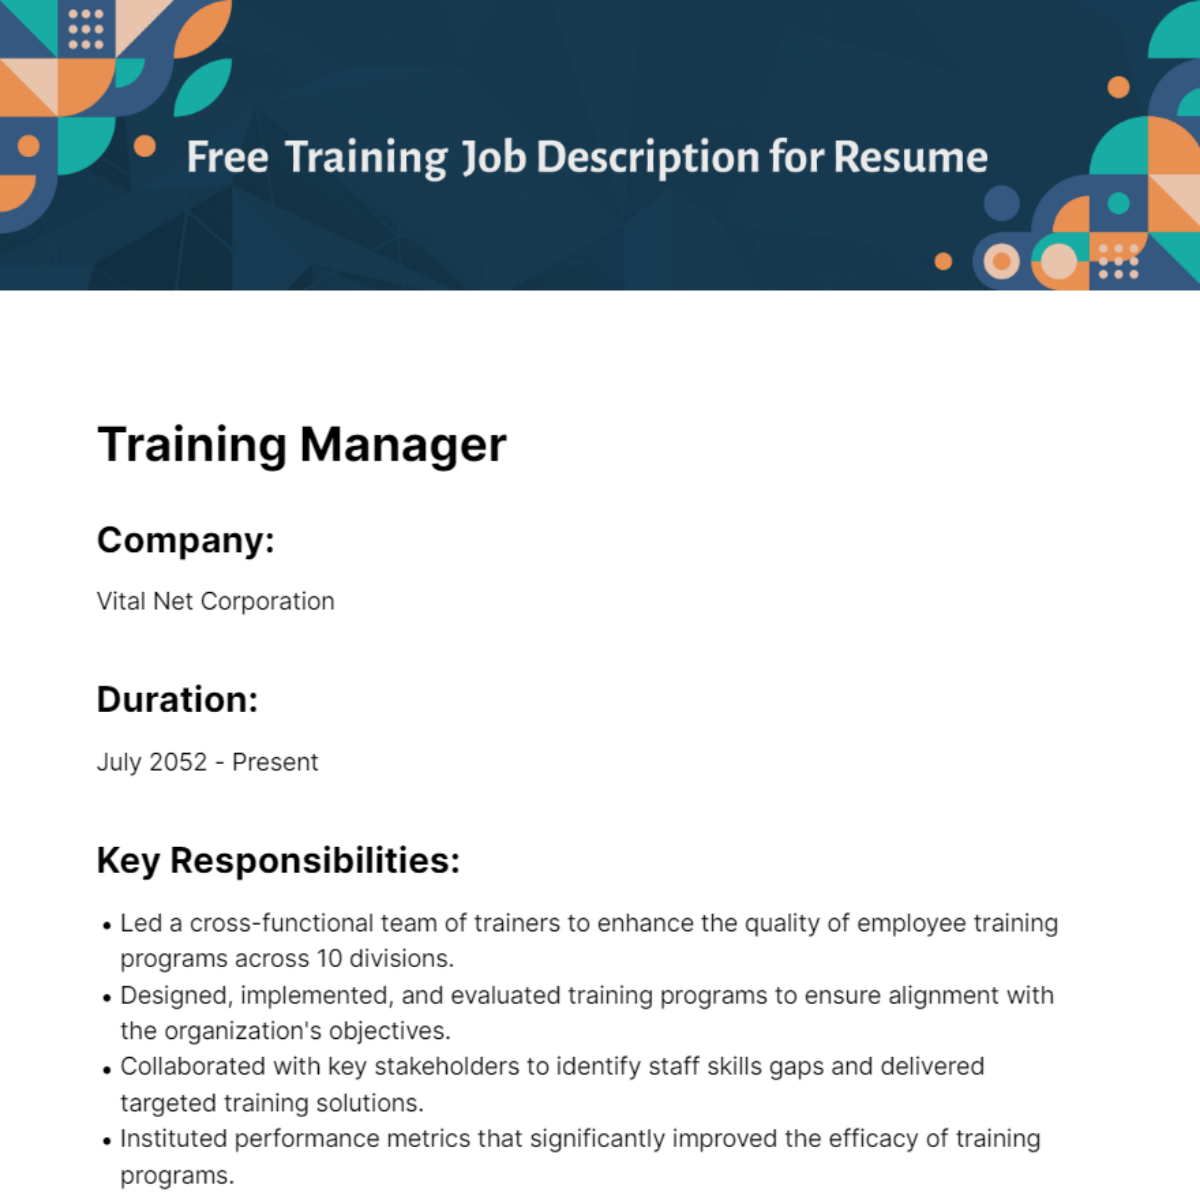 Free Training Job Description for Resume Template